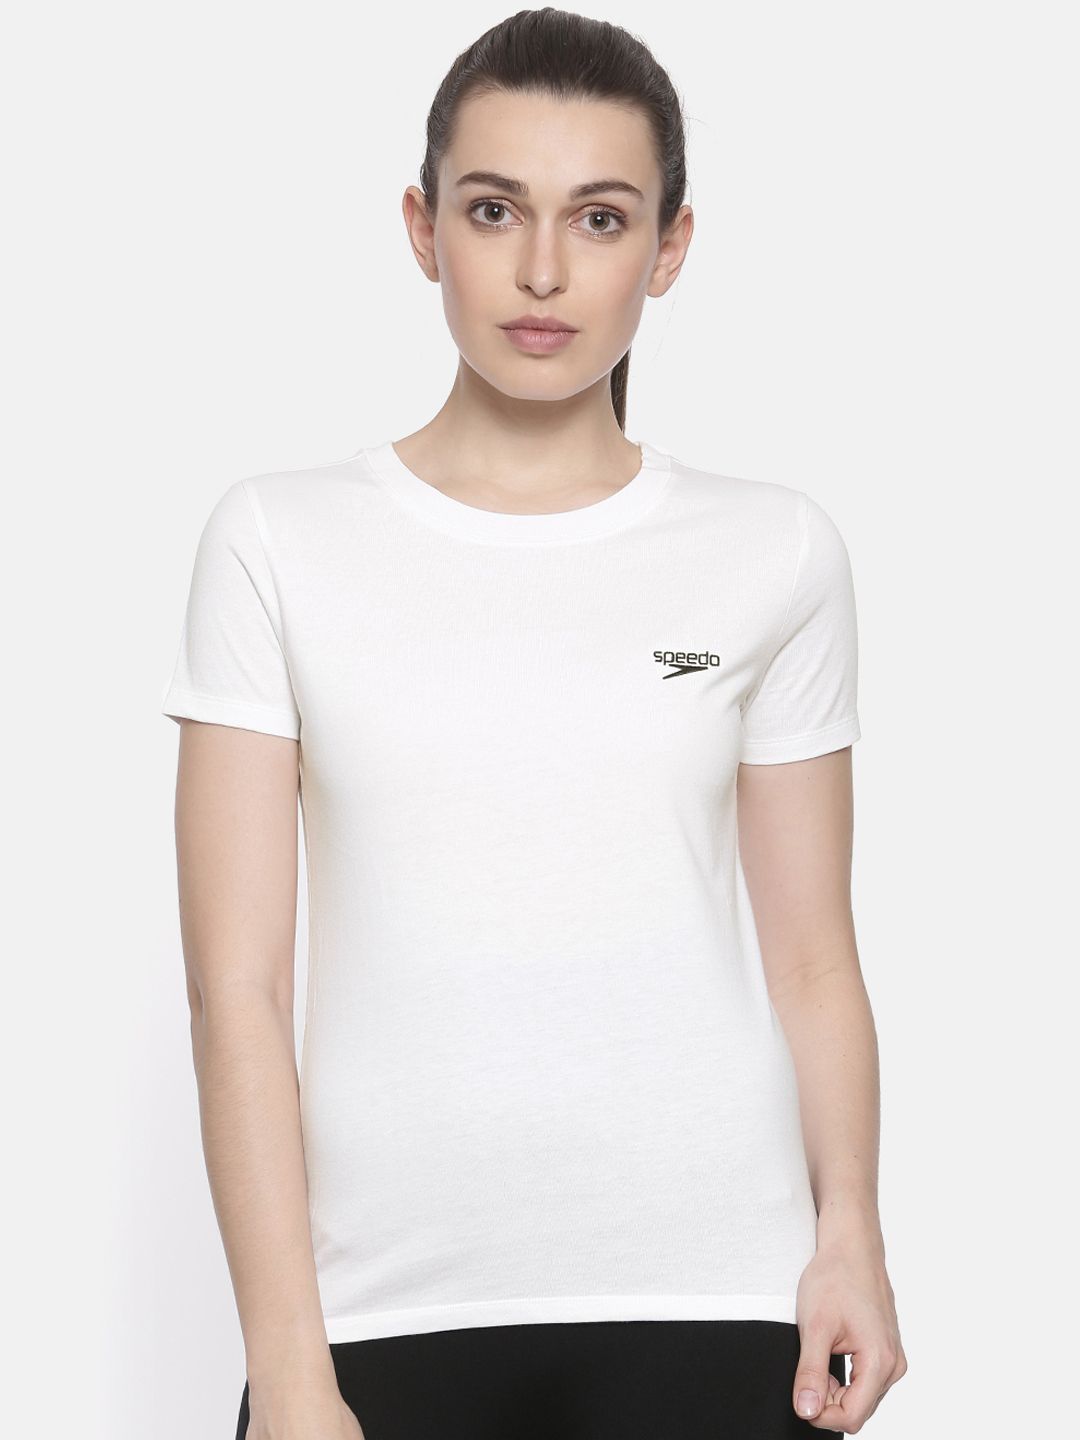 Speedo Women White Solid Round Neck Pure Cotton T-shirt Price in India